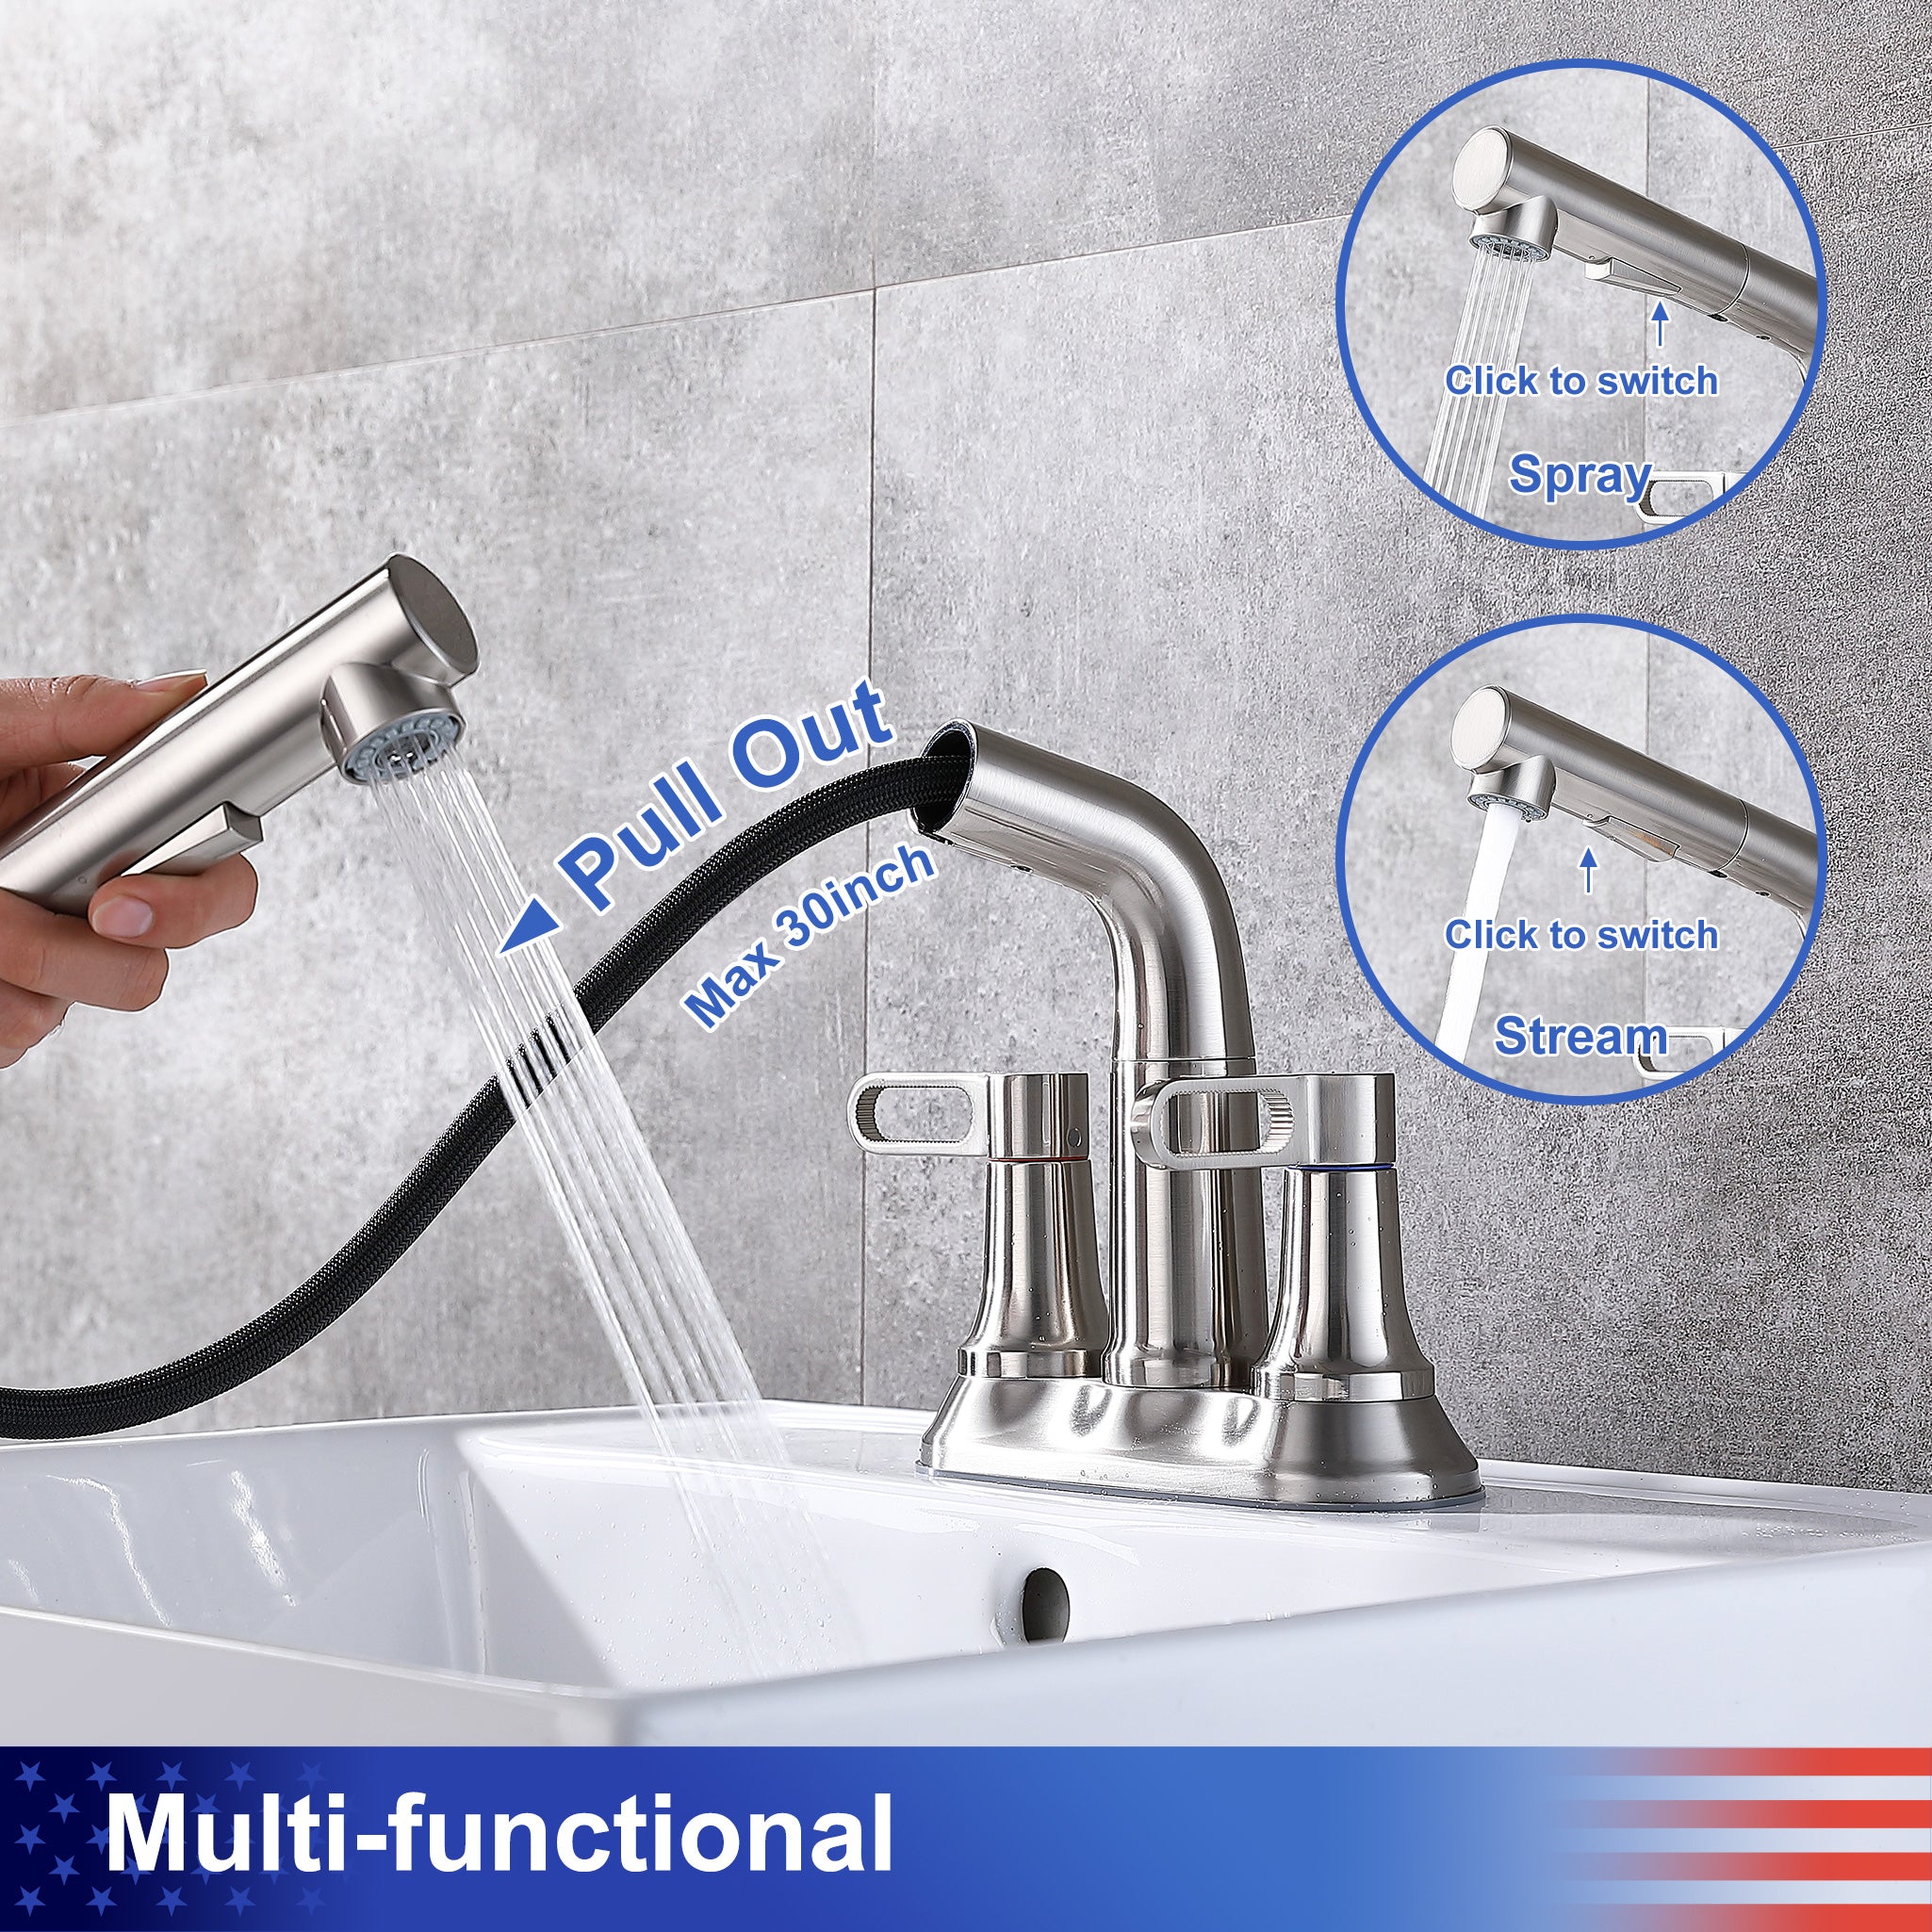 Centerset 2-Handle Bathroom Faucet RX5901